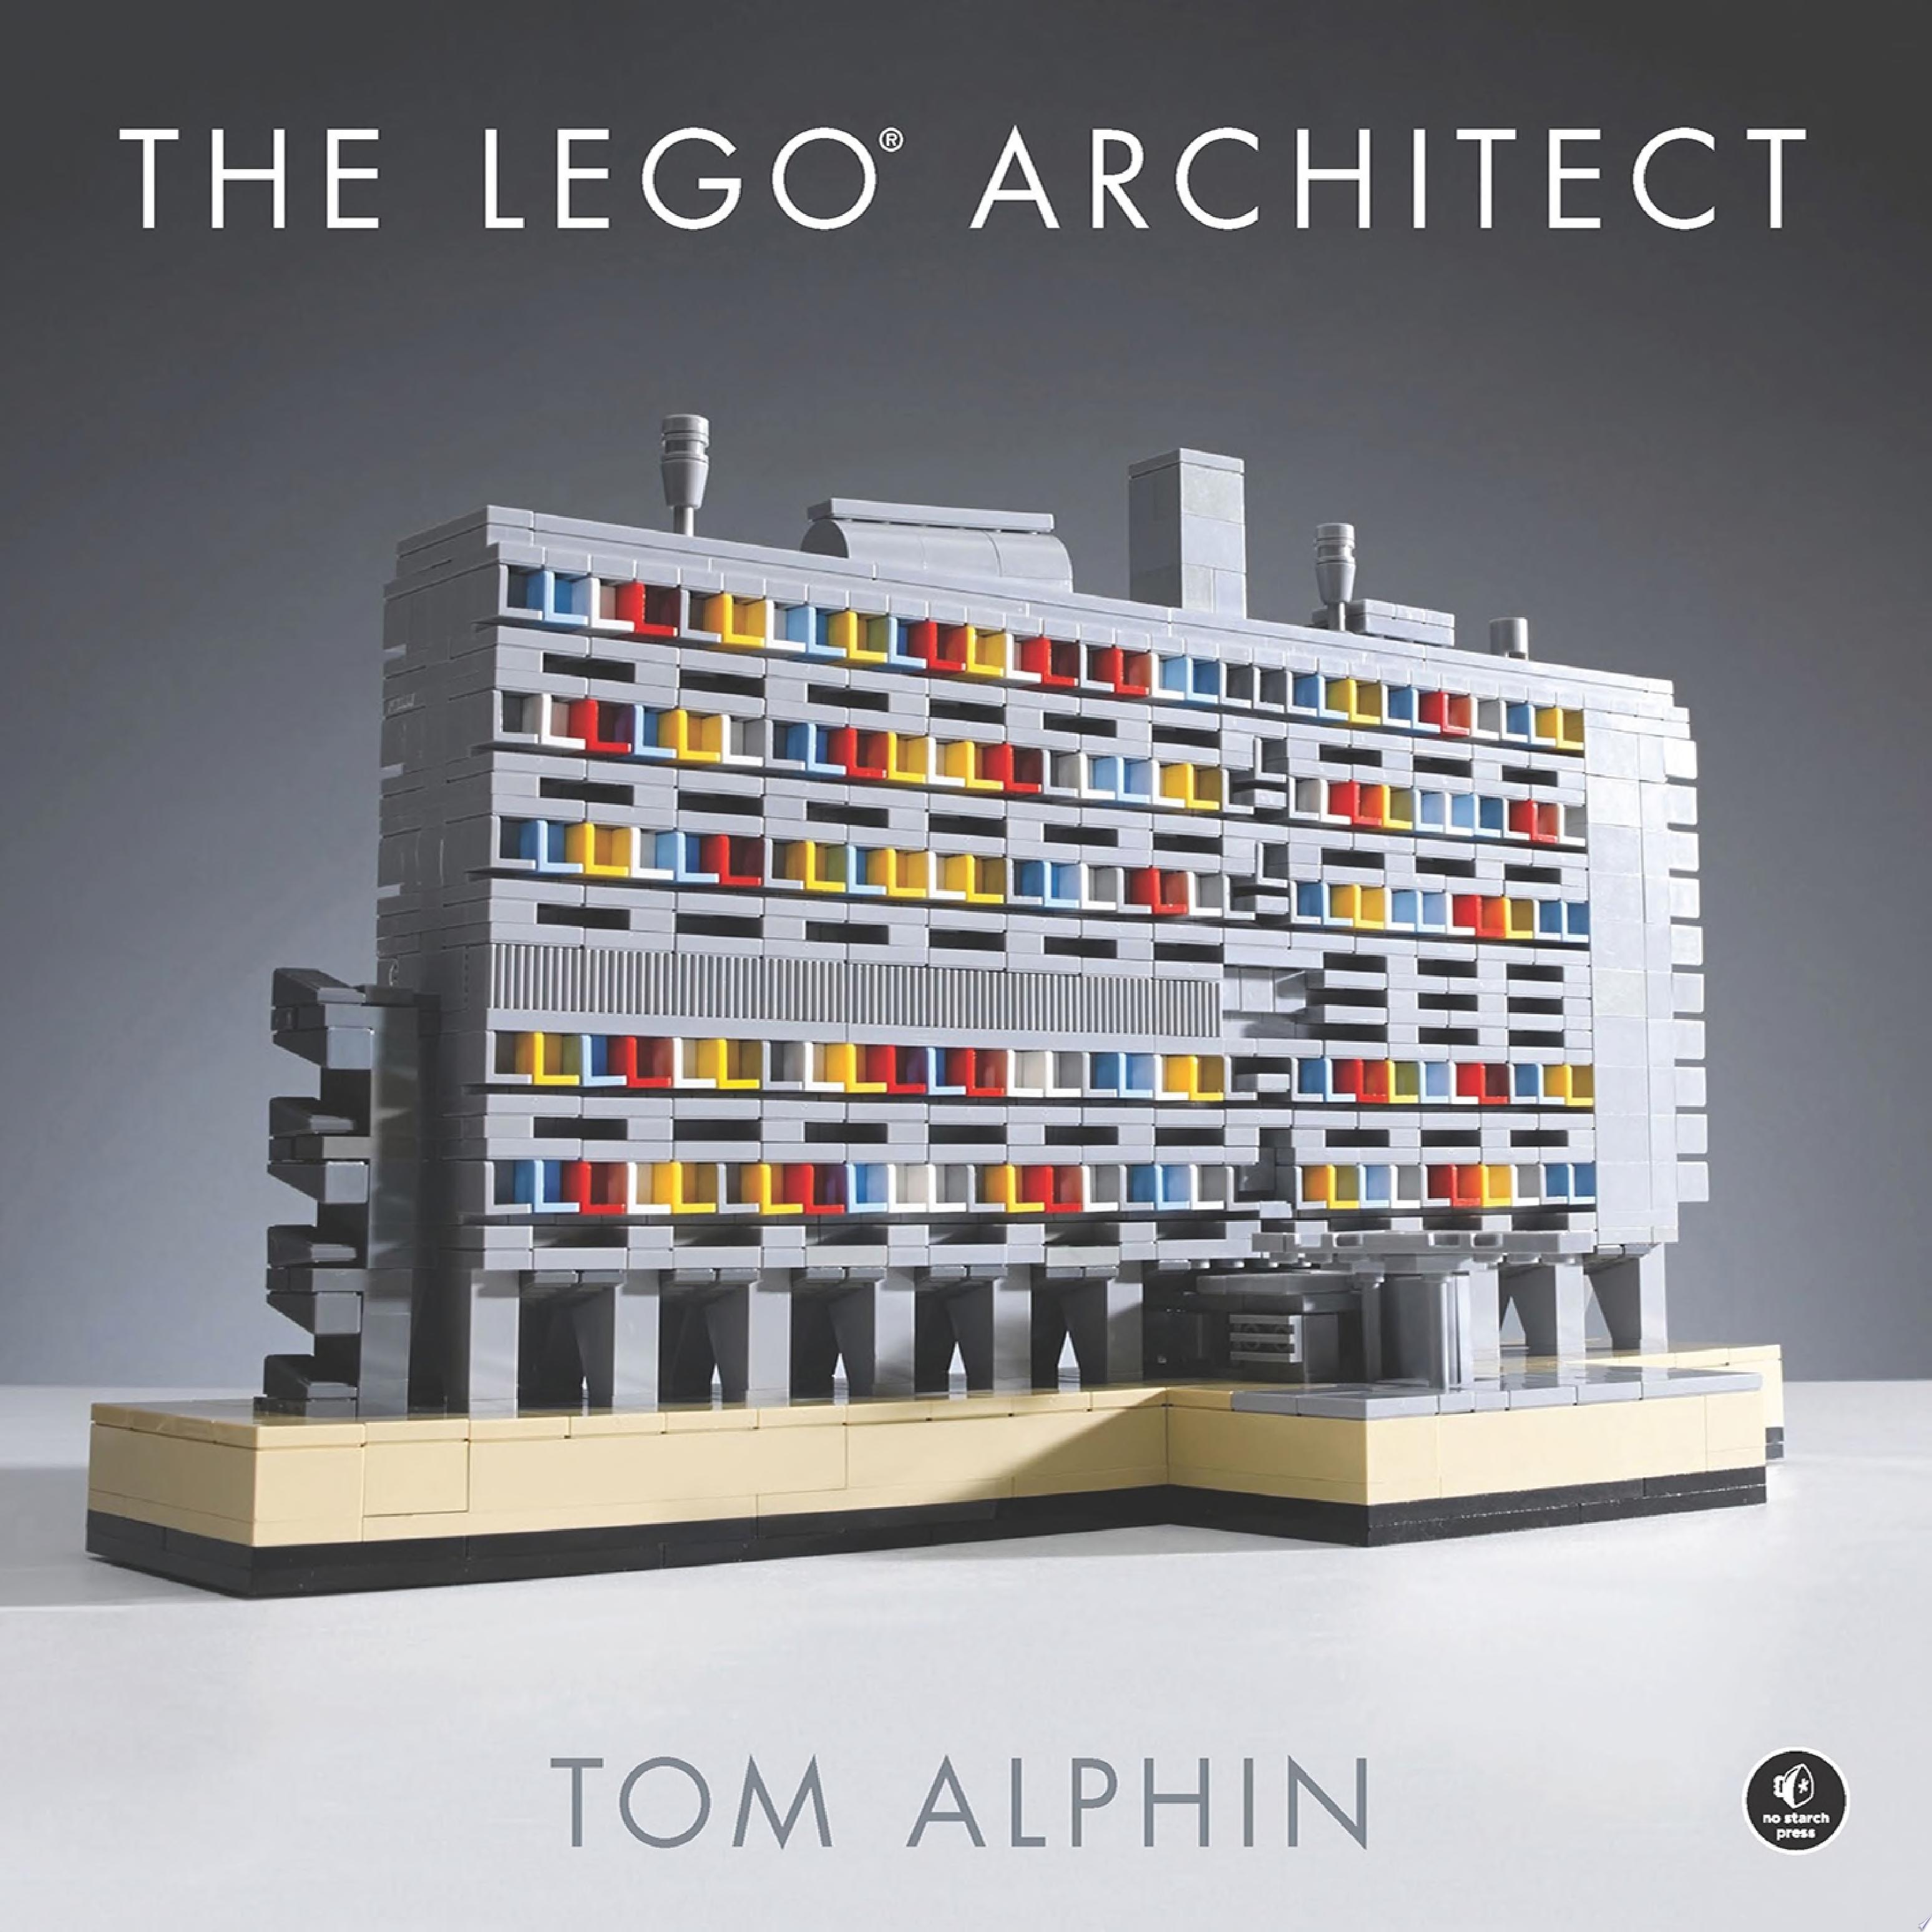 Image for "The LEGO Architect"